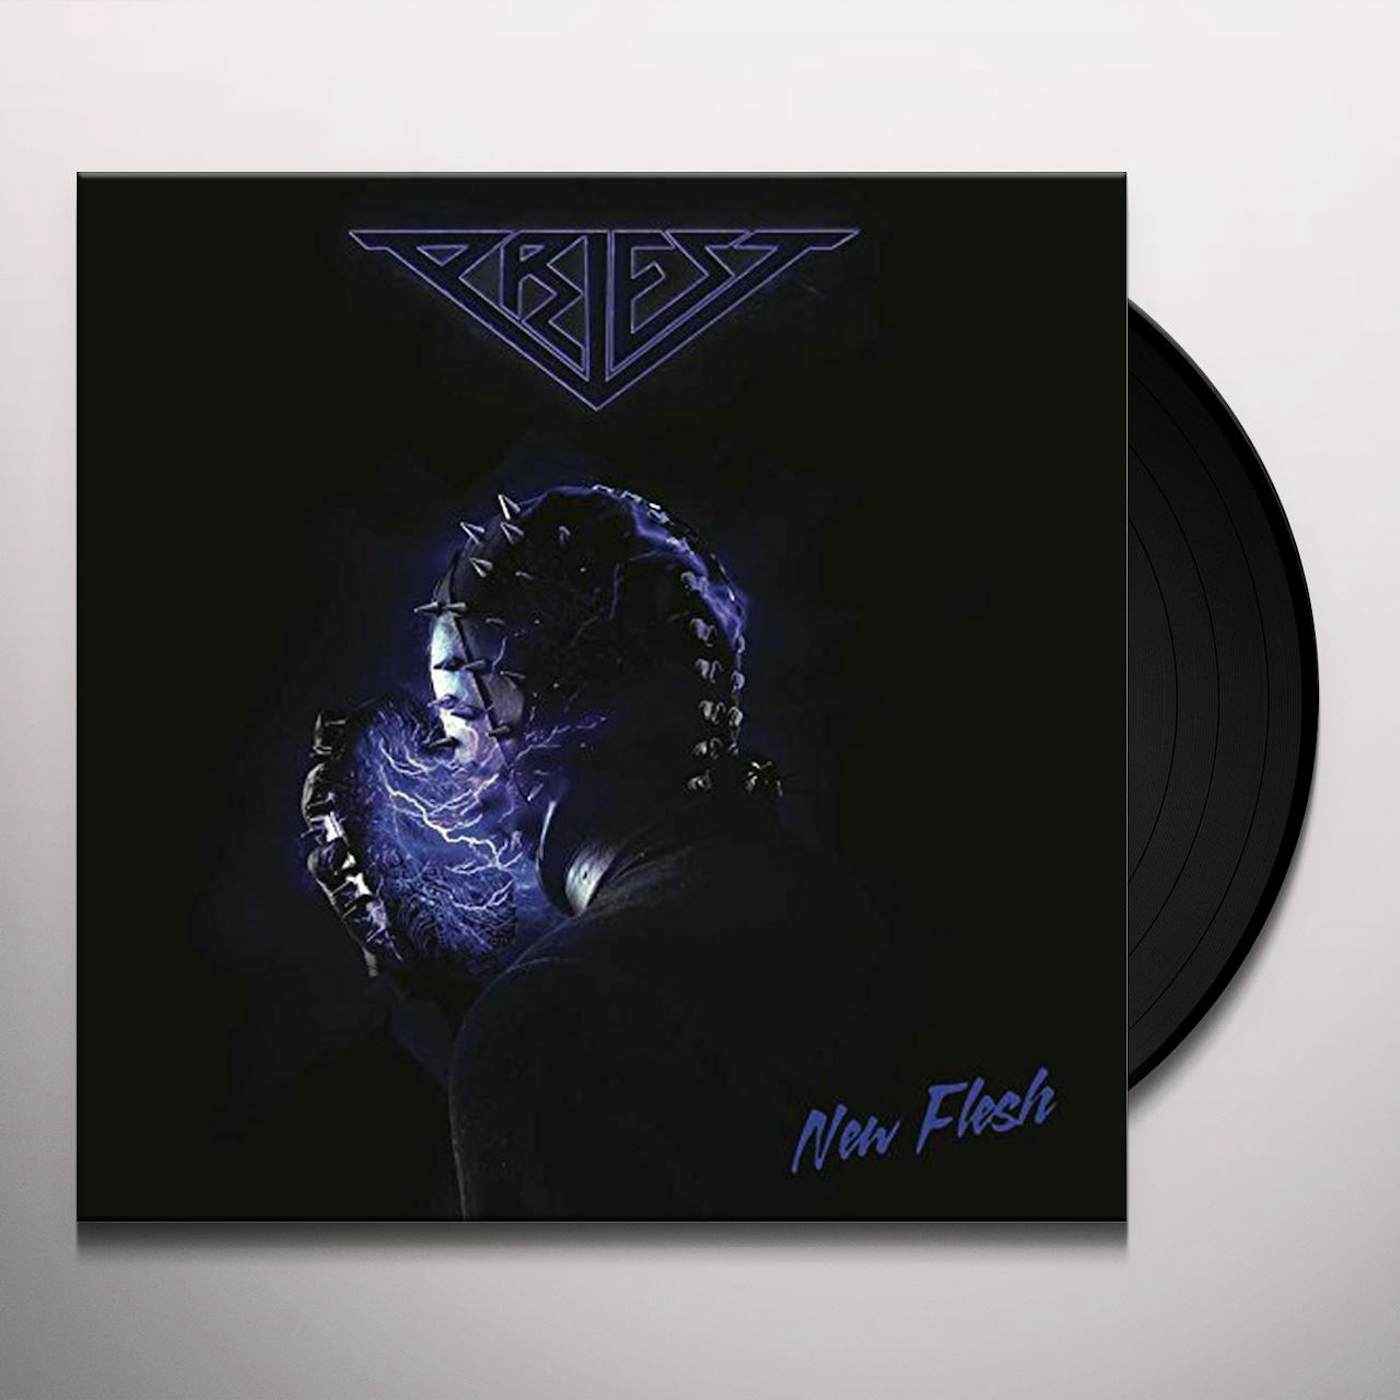 Priest New Flesh Vinyl Record